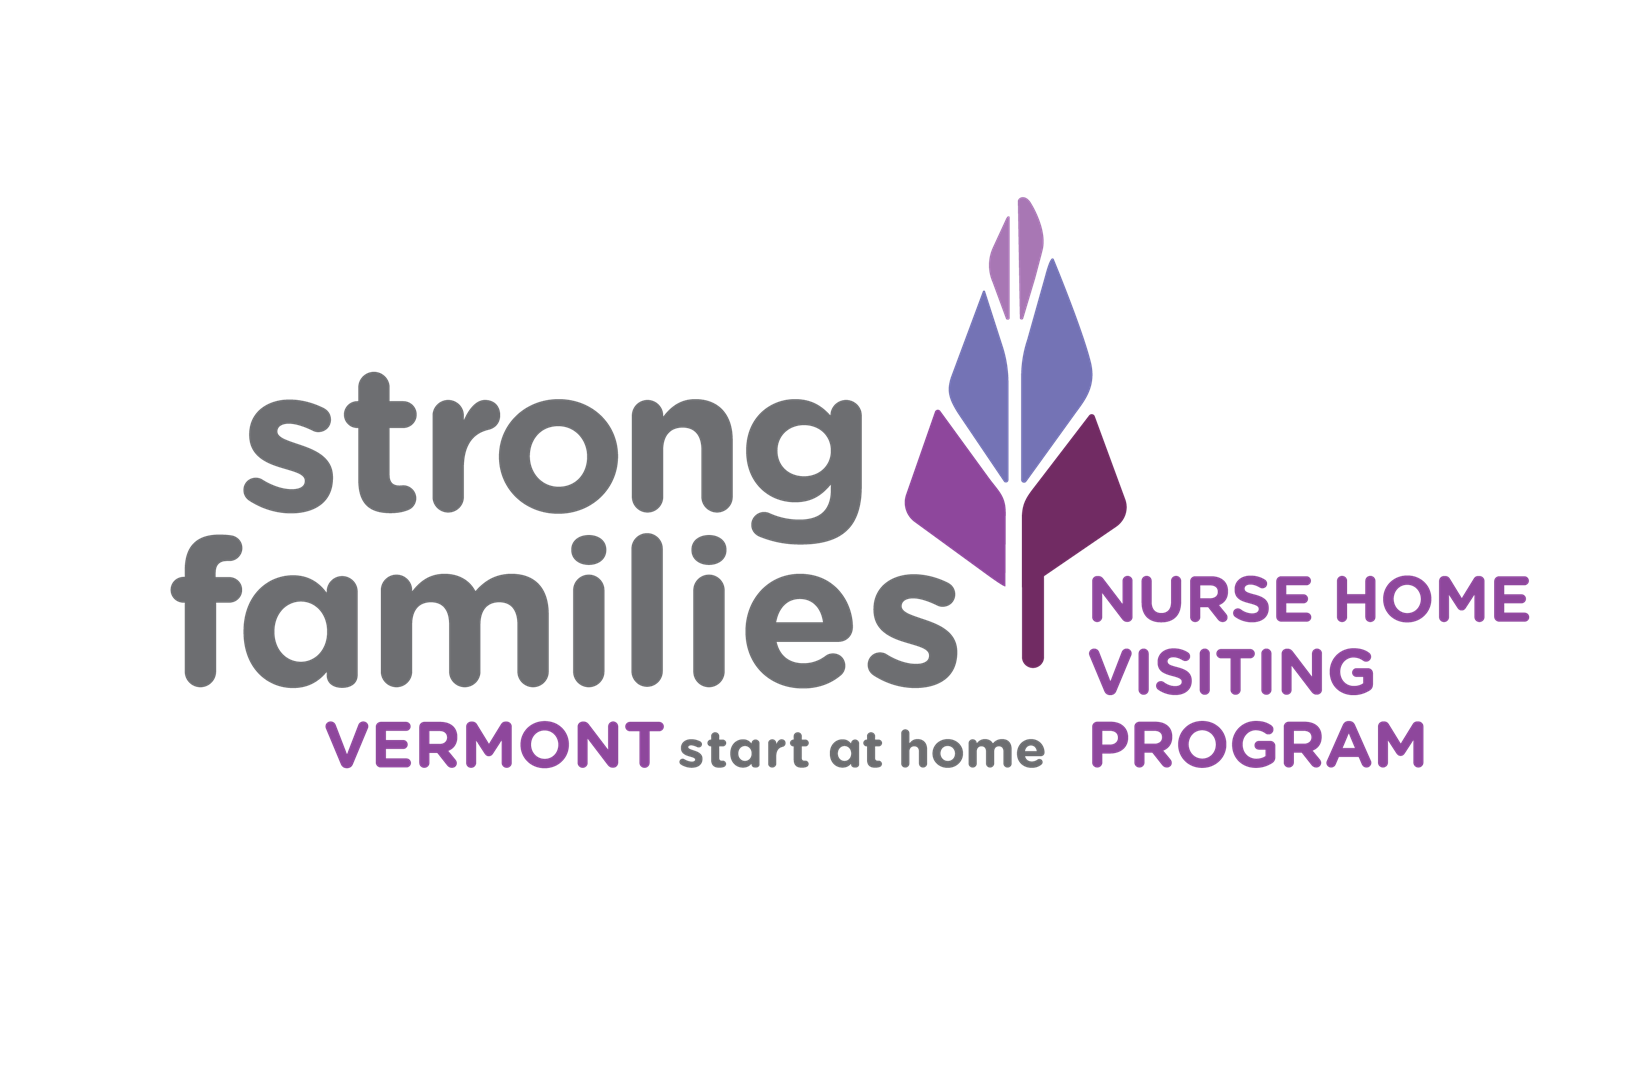 Strong Families Vermont Nurse Home Visiting Program logo